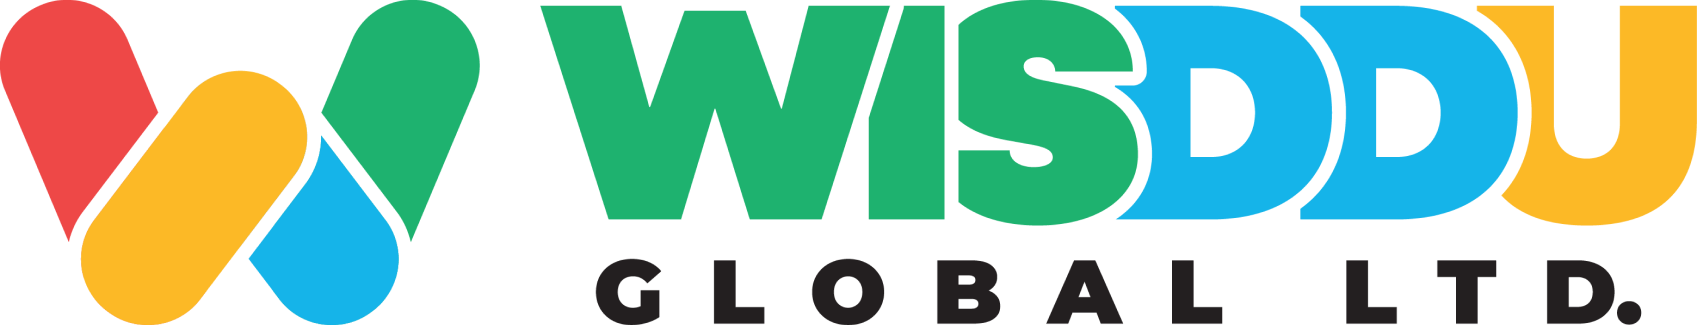 WISDD Global